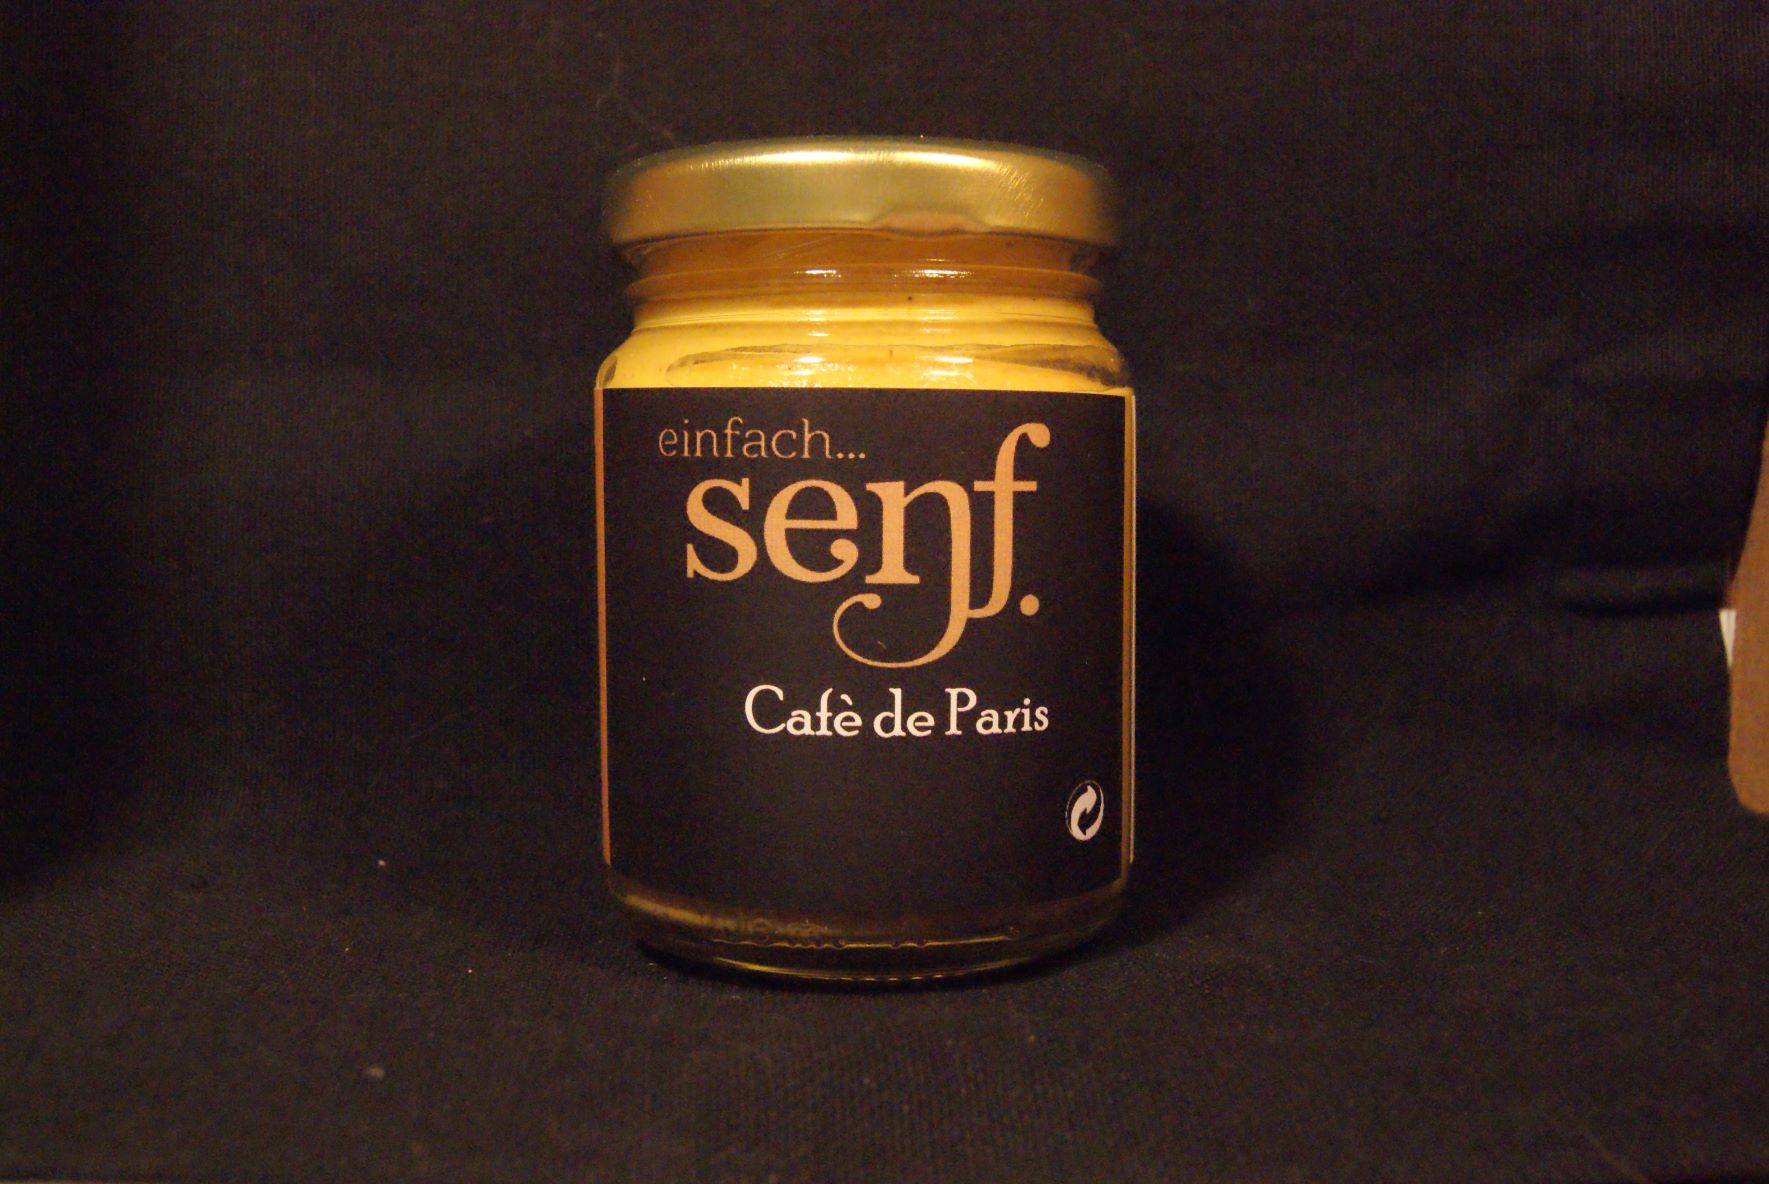 Senf "Cafe de Paris"